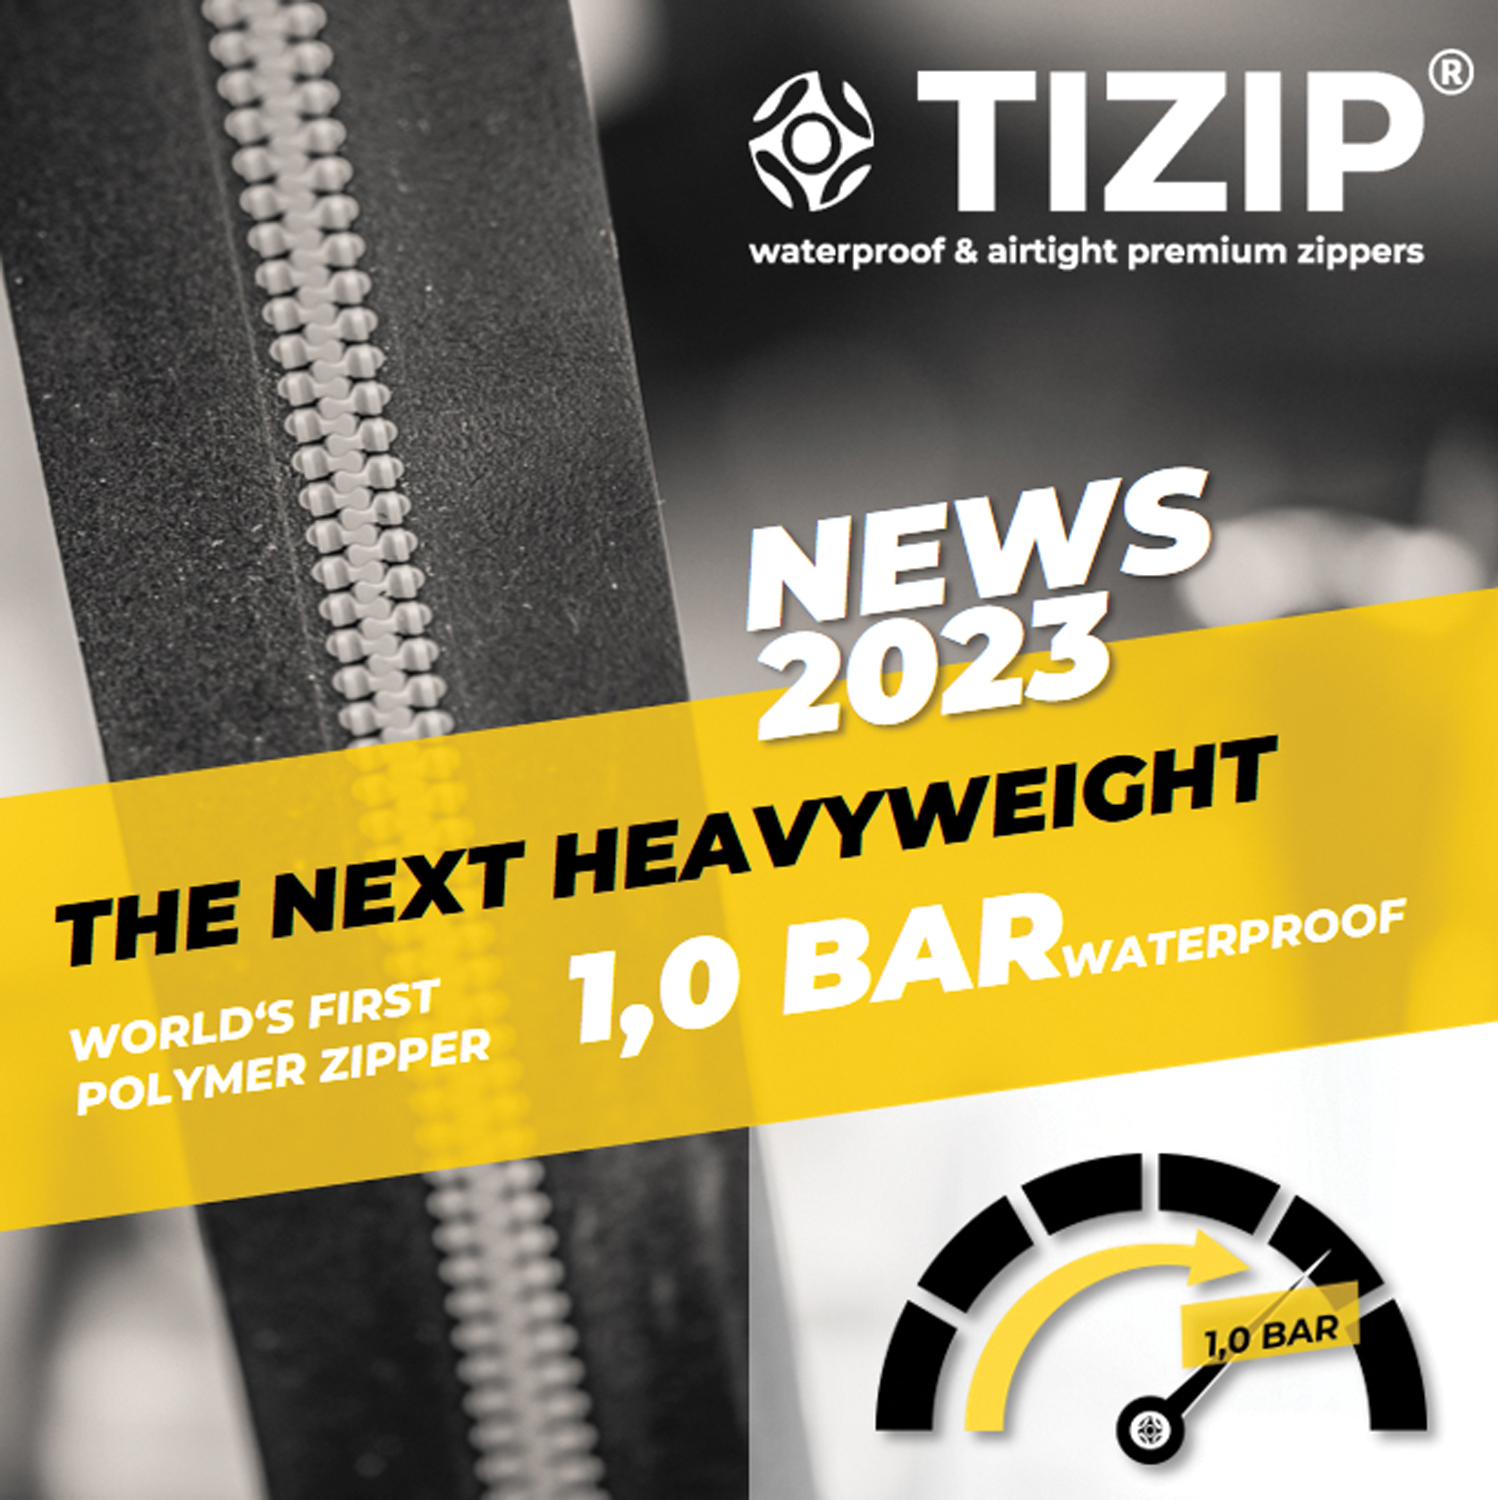 1,0 Bar Waterproof and Airtight Zipper Image